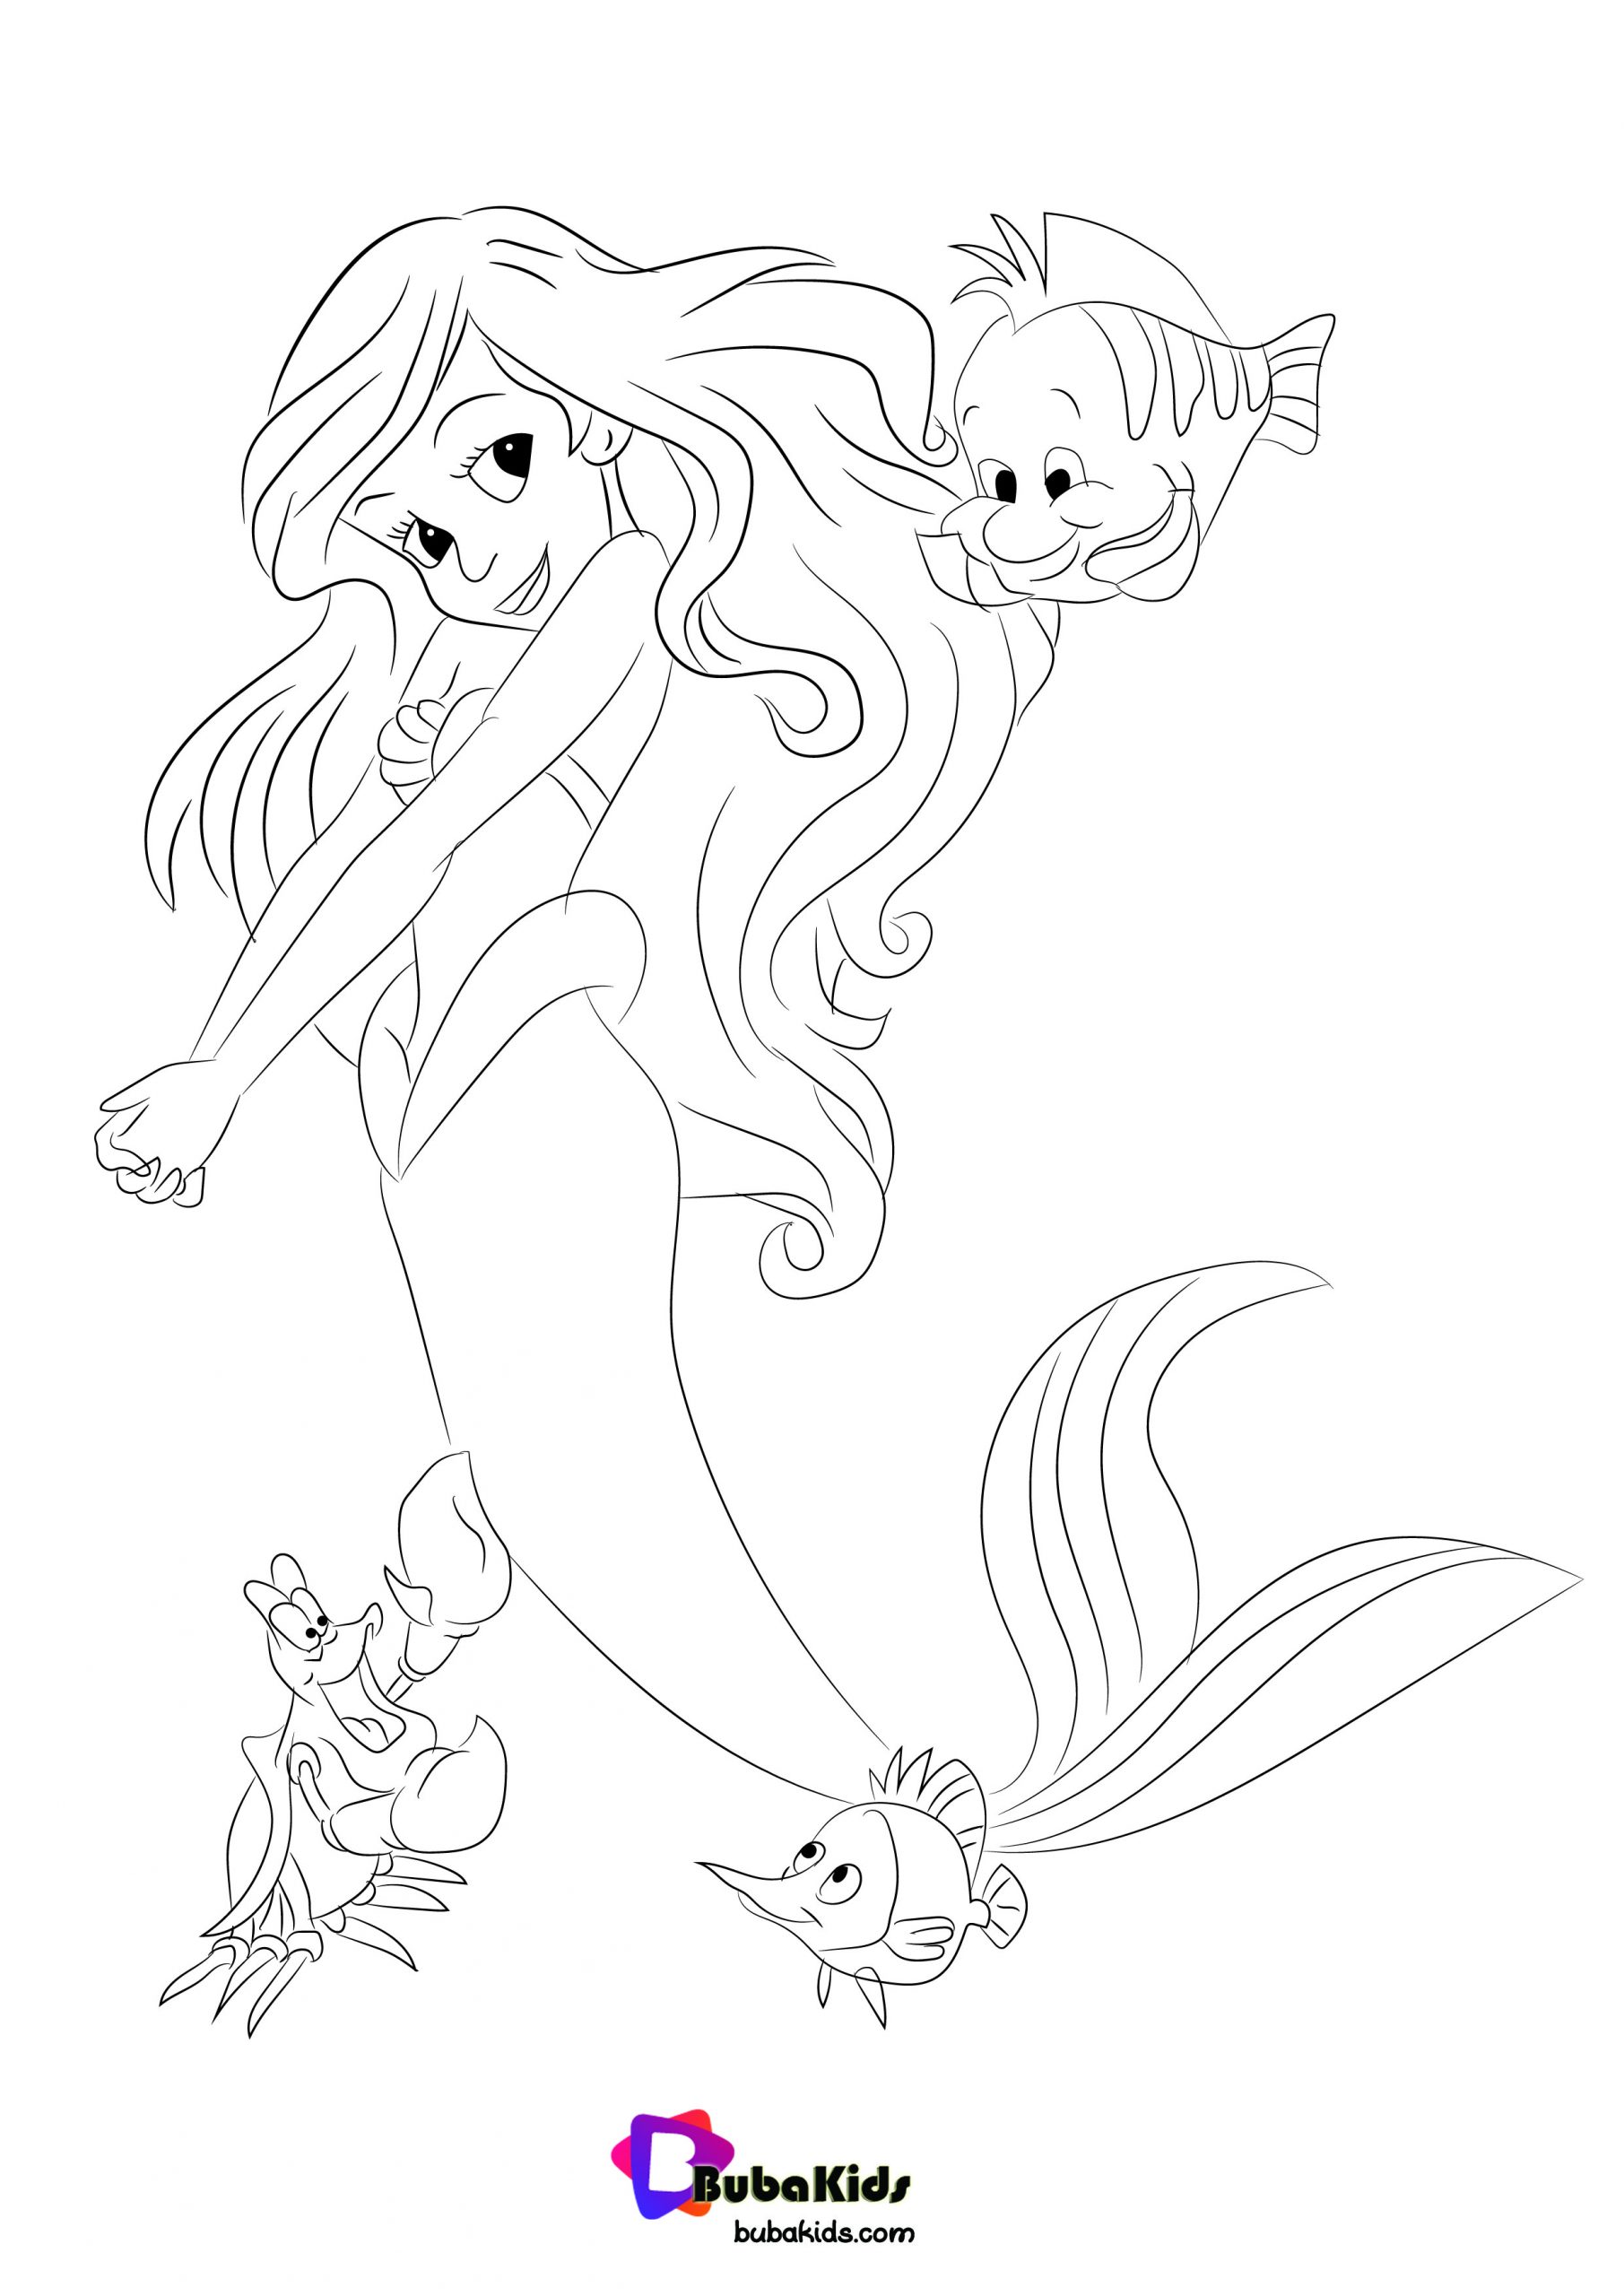 Princess Ariel Coloring Page Tracing By Bubakids Wallpaper